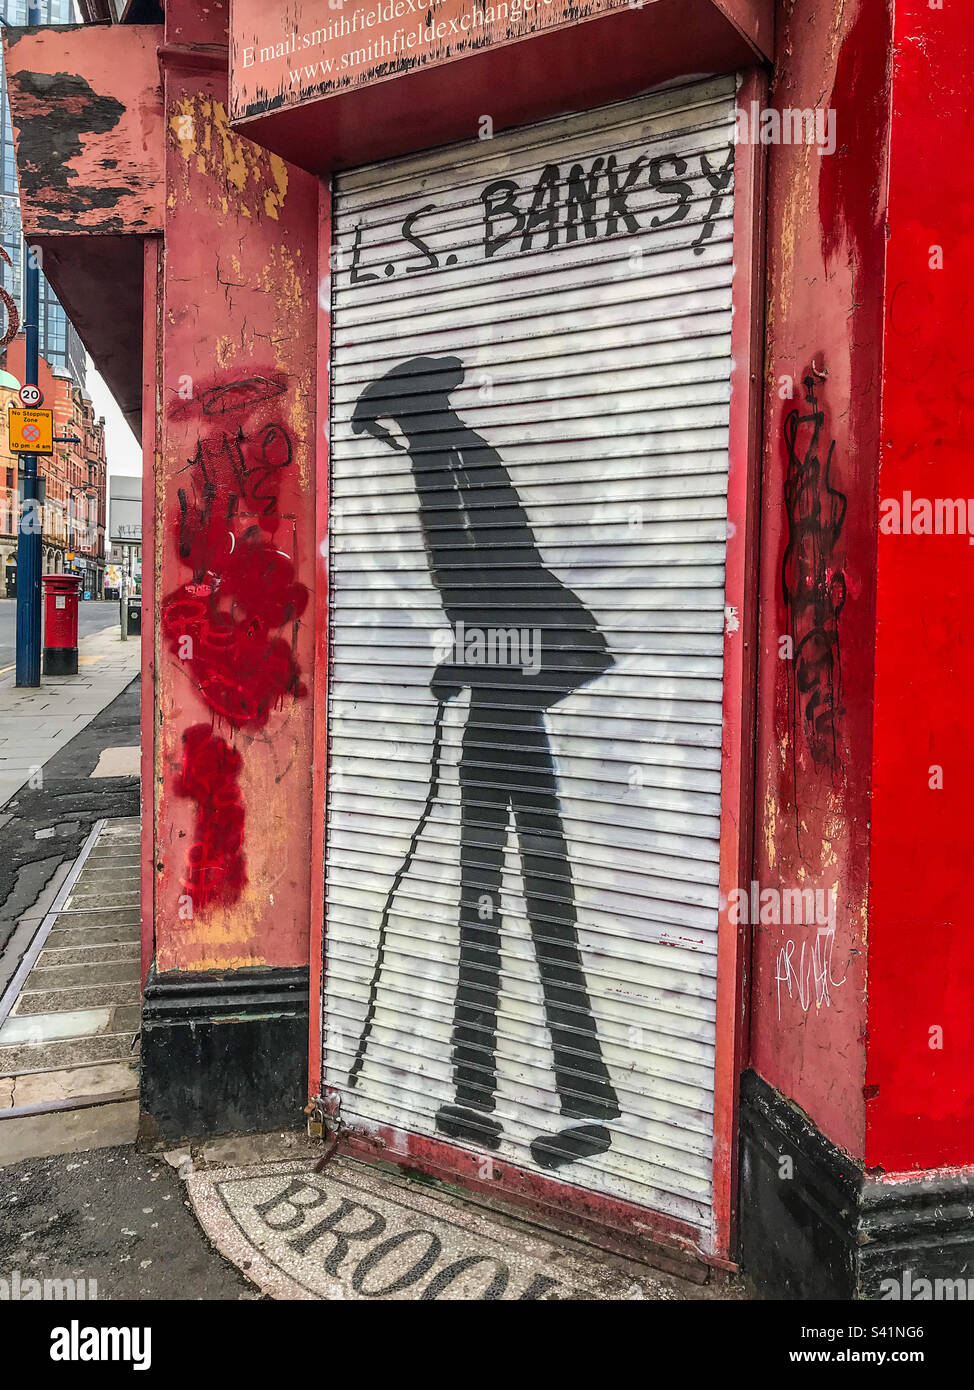 Lowry Banksy street art Stock Photo